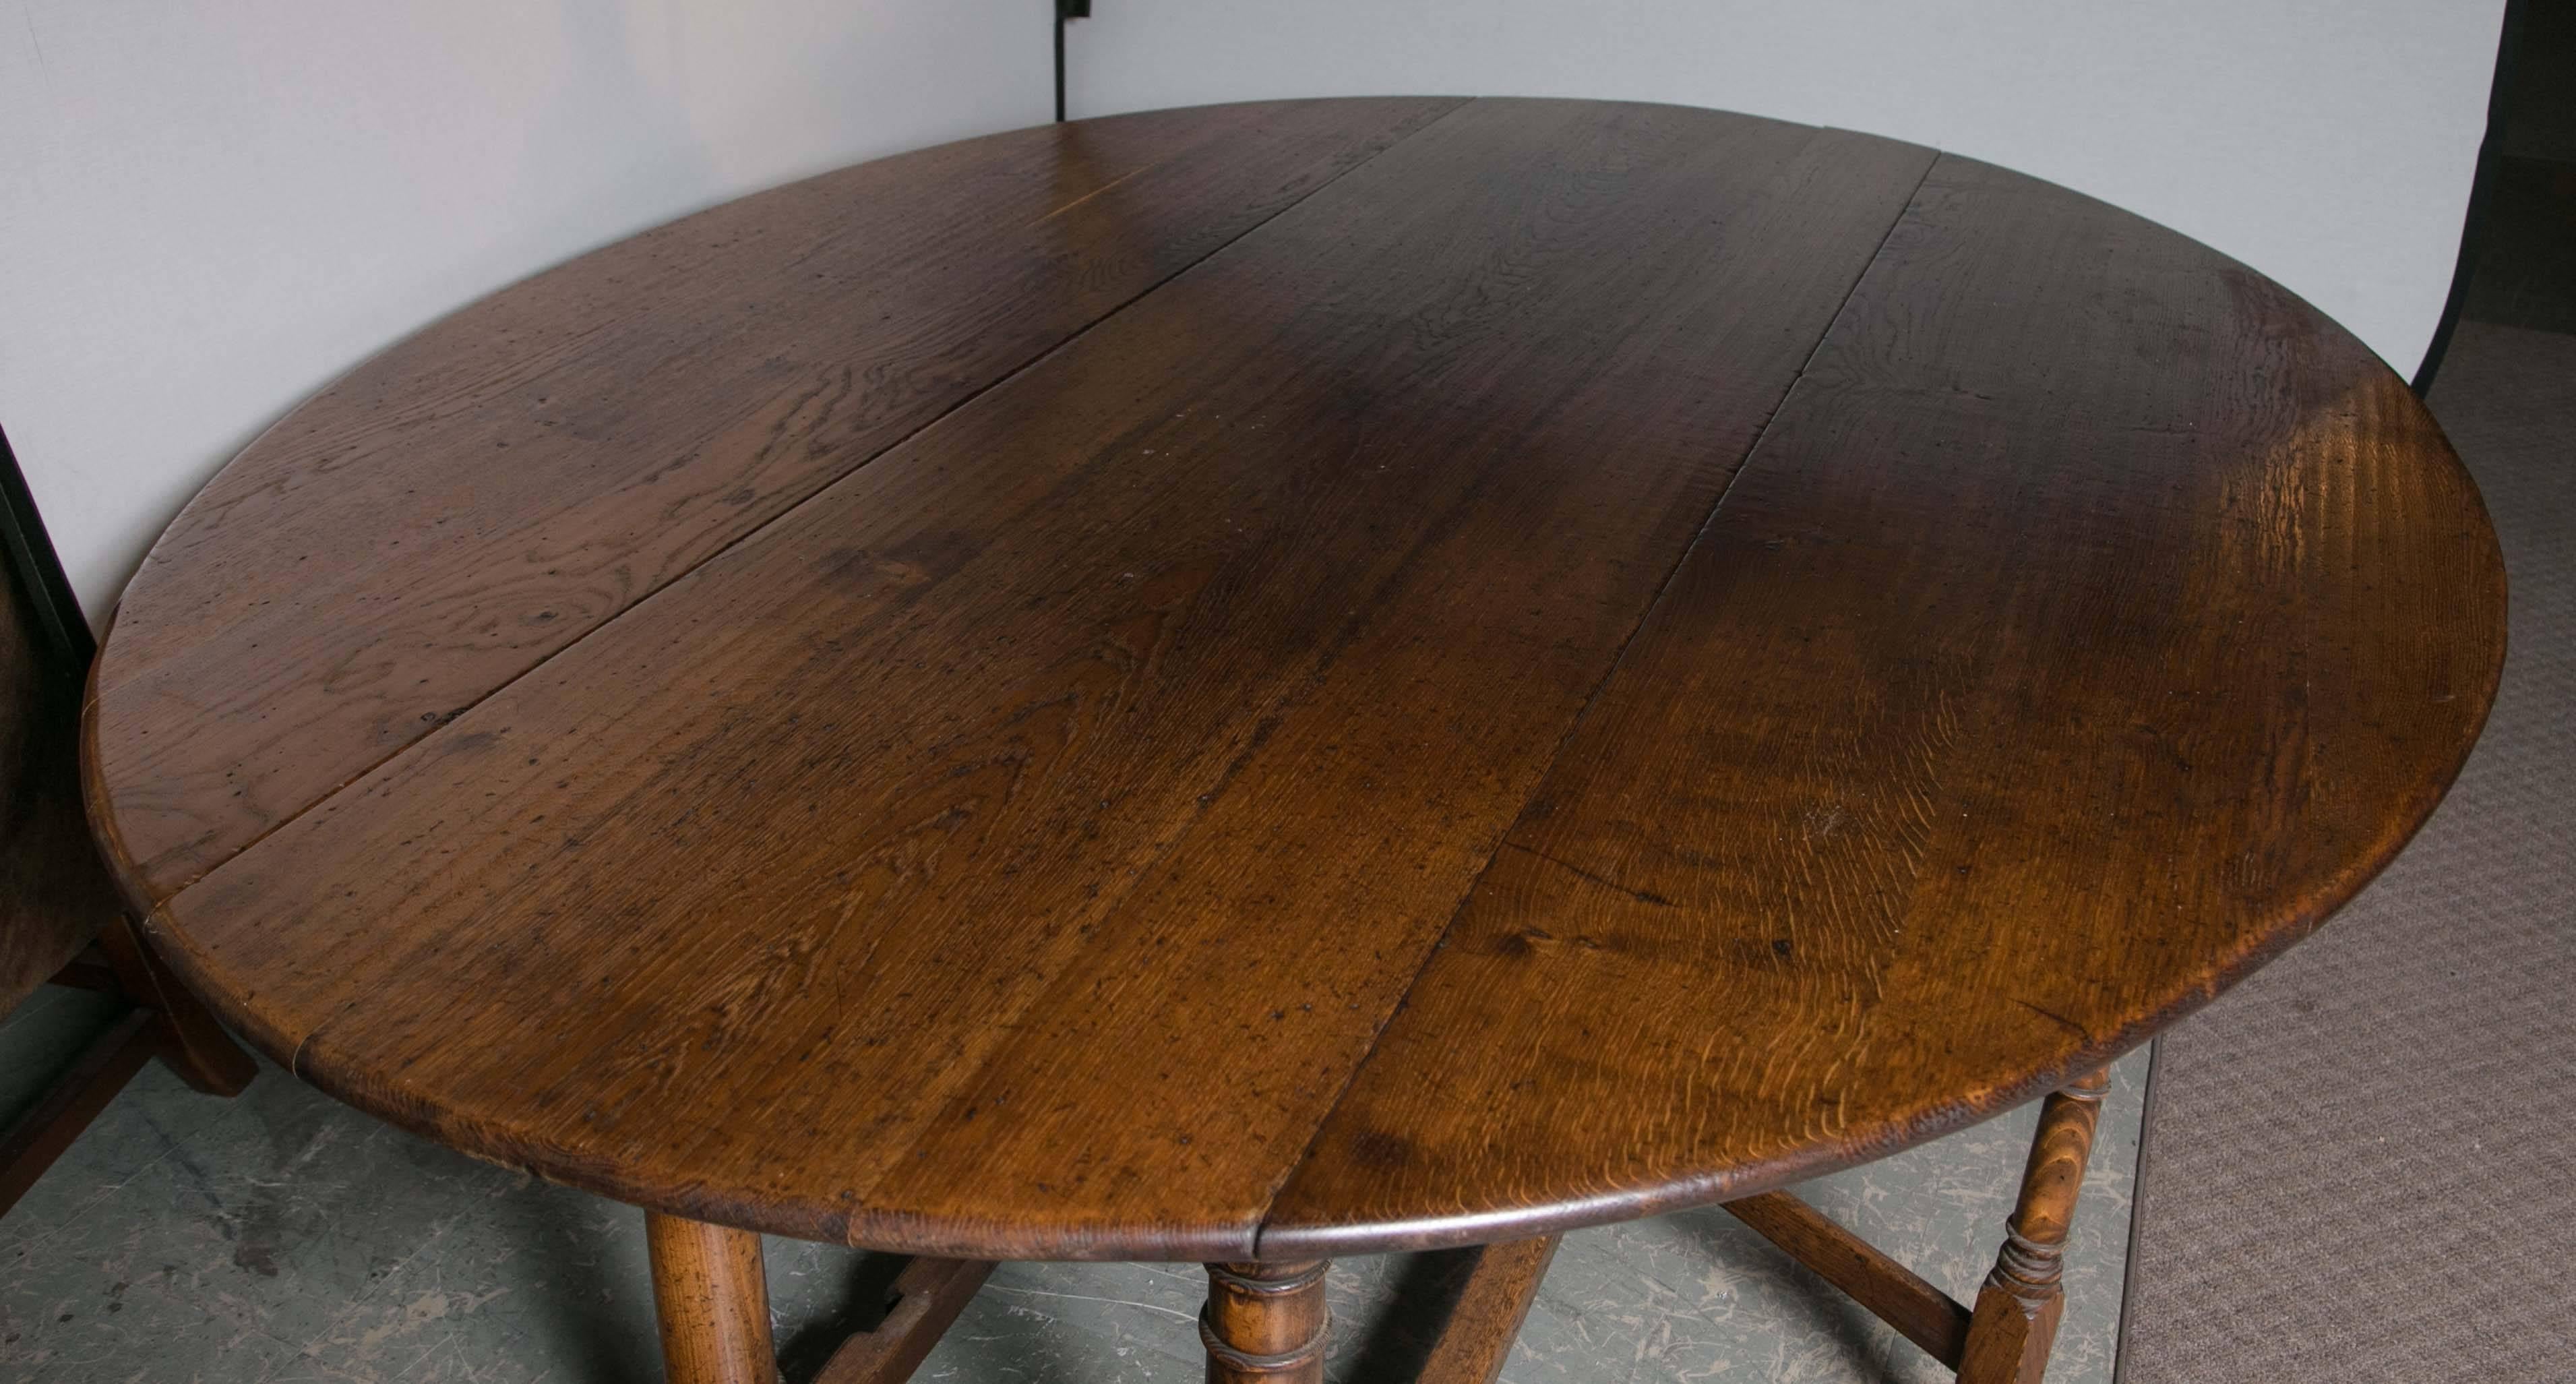 Large English oak gateleg dining table early 20th century.